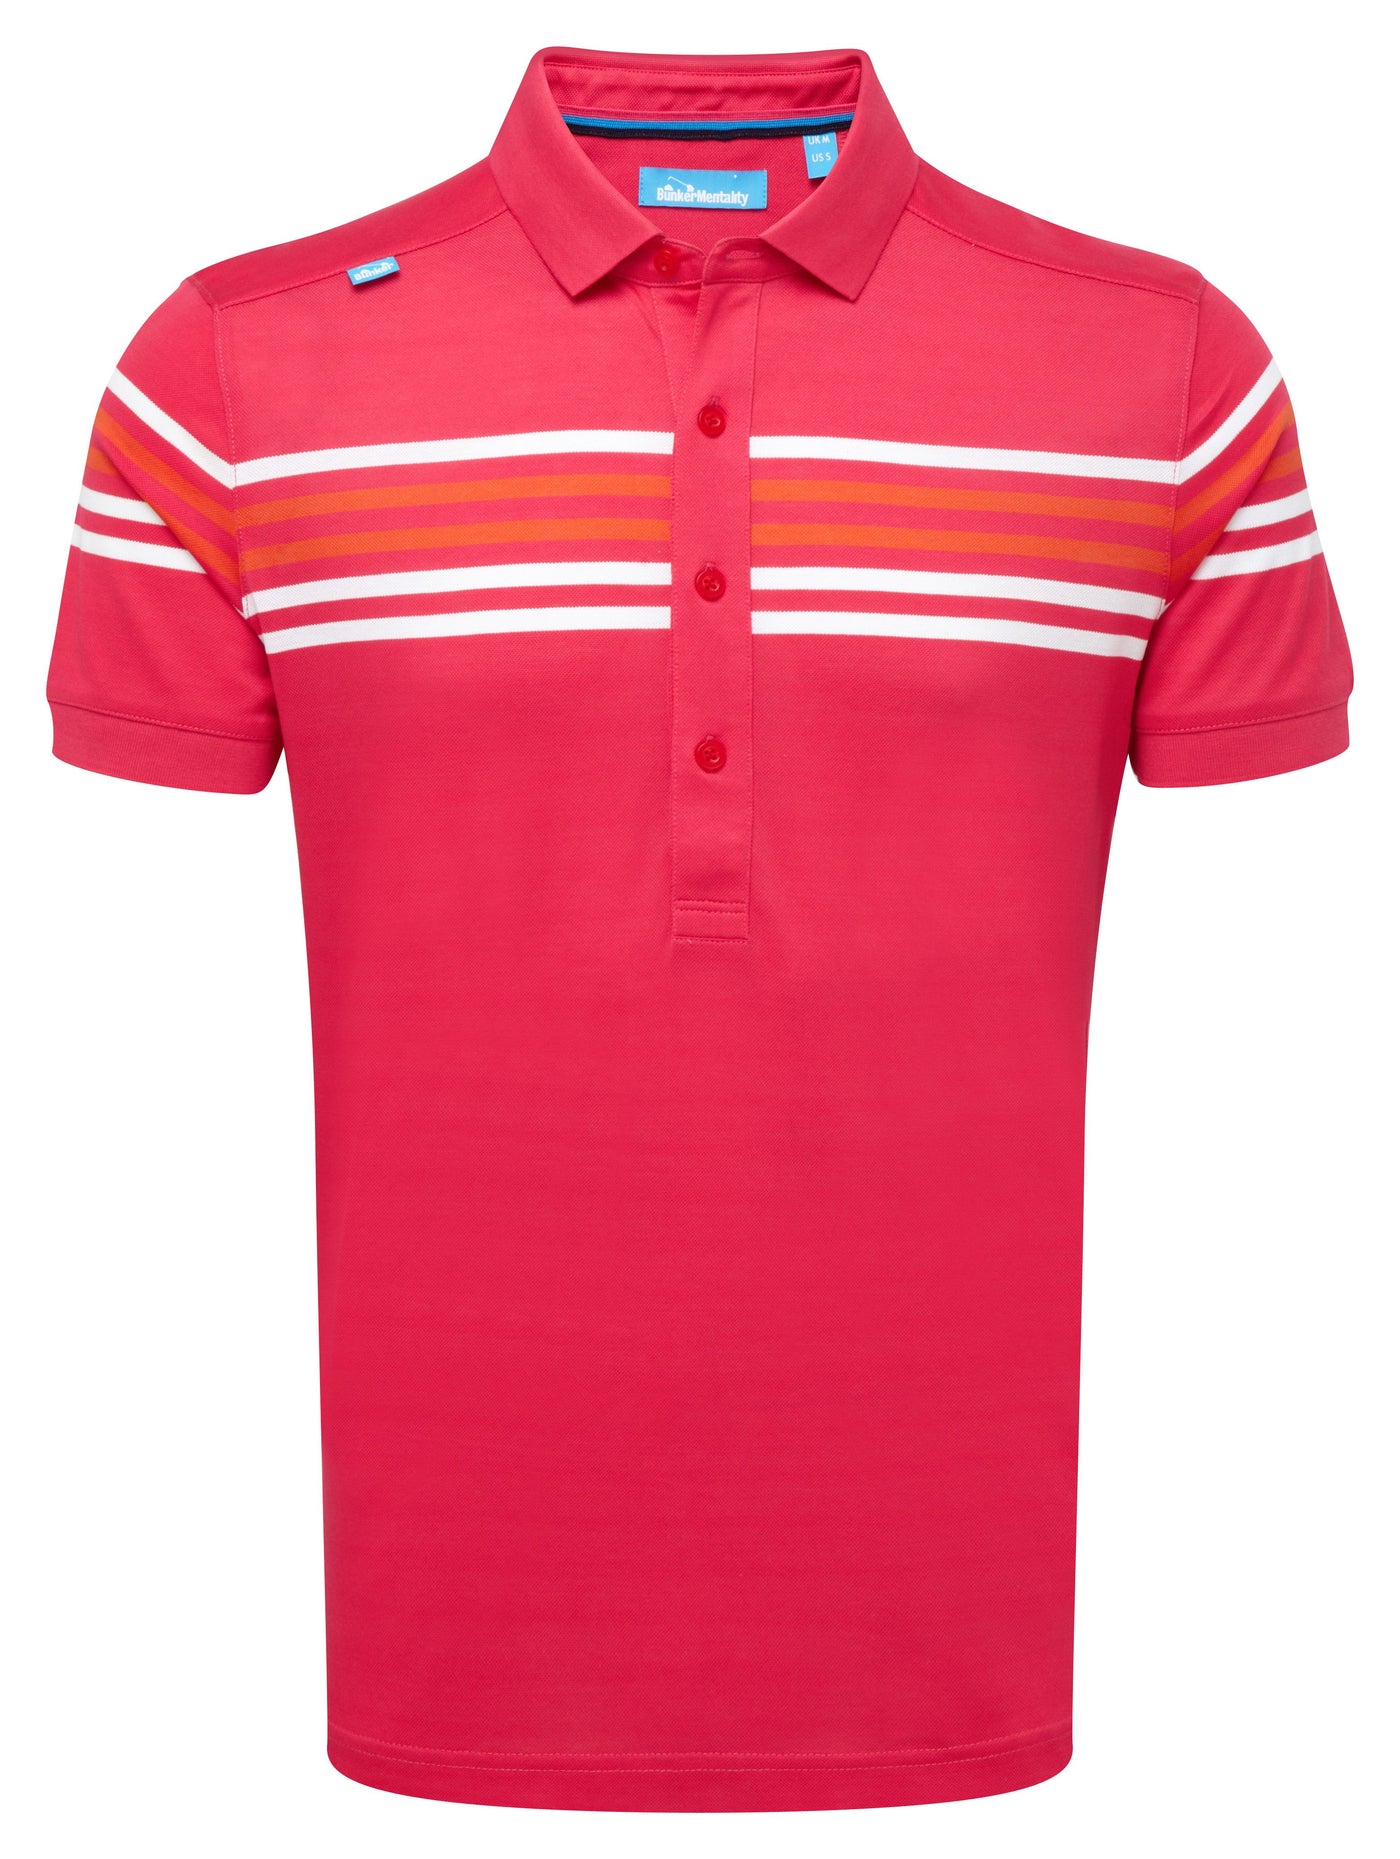 Cotton Racing Stripe Polo Shirt - Hot Pink - Various Sizes (sample)